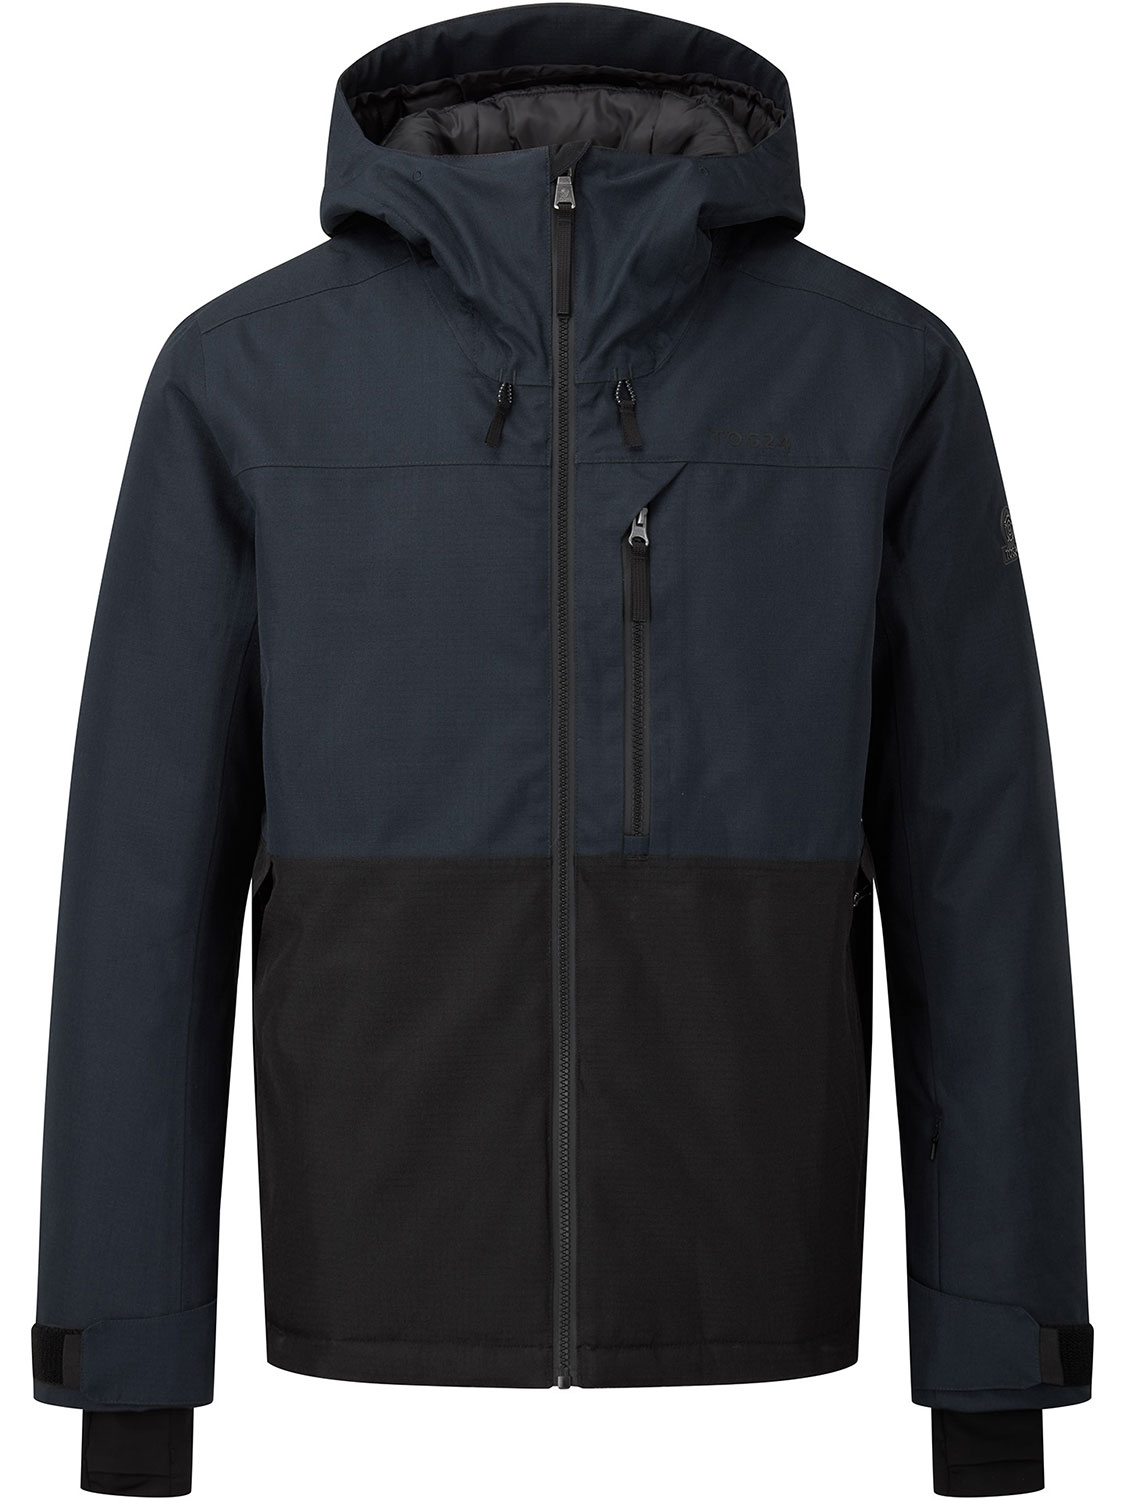 Hail Ski Jacket - Size: Medium Men’s Blue Tog24